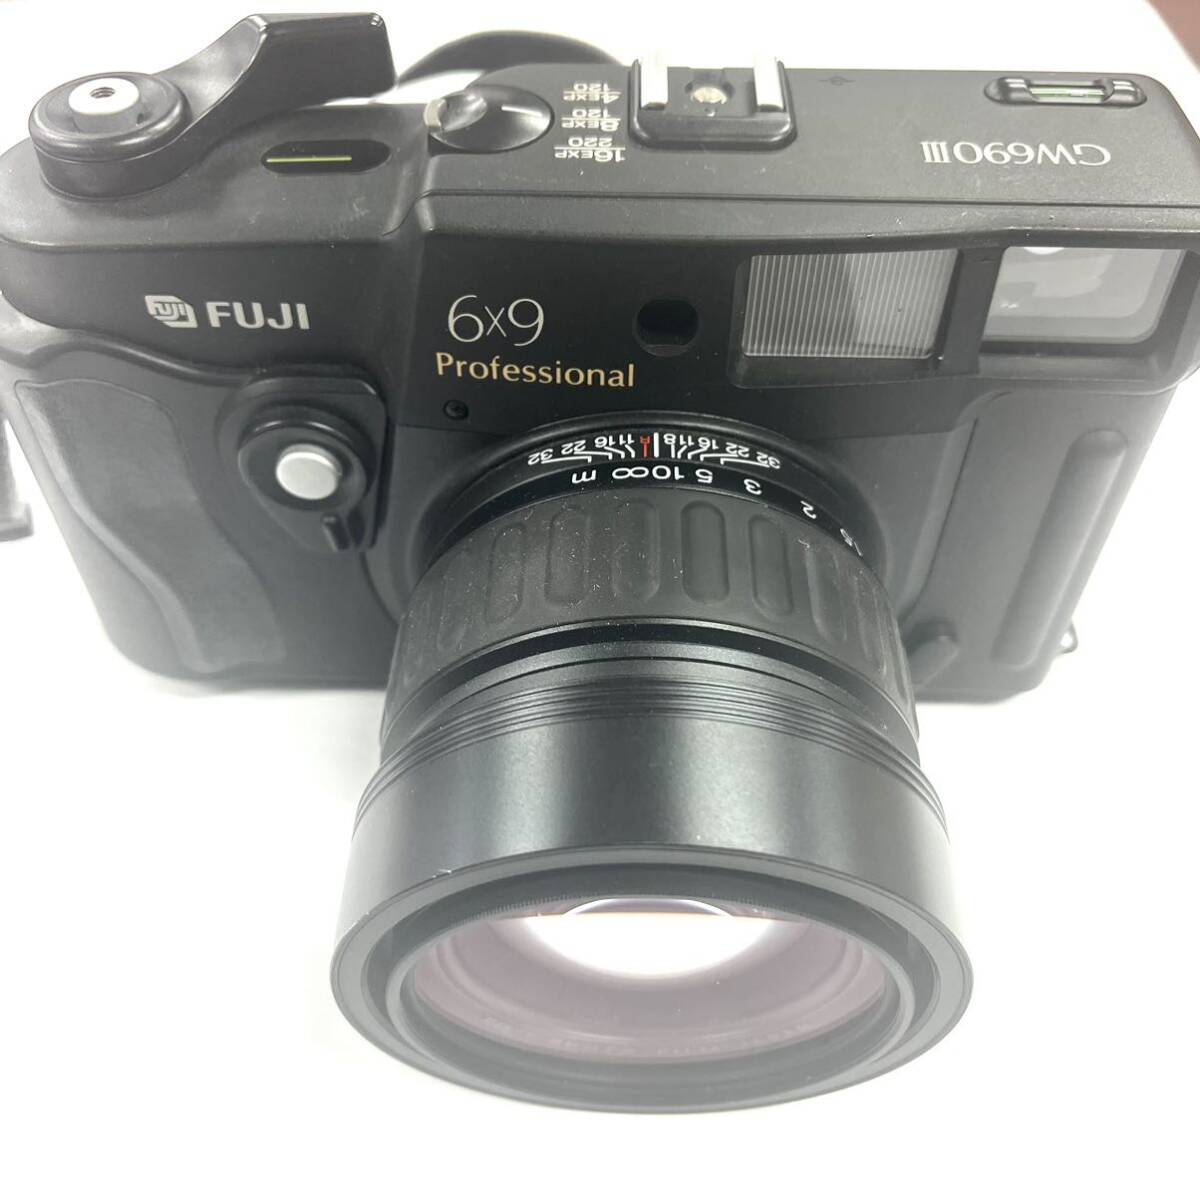 N386 フィルムカメラ FUJIFILM GW690III 6x9 Professional EBC FUJINON 1:3.5 f=90mm ジャンク品 中古 訳ありの画像2